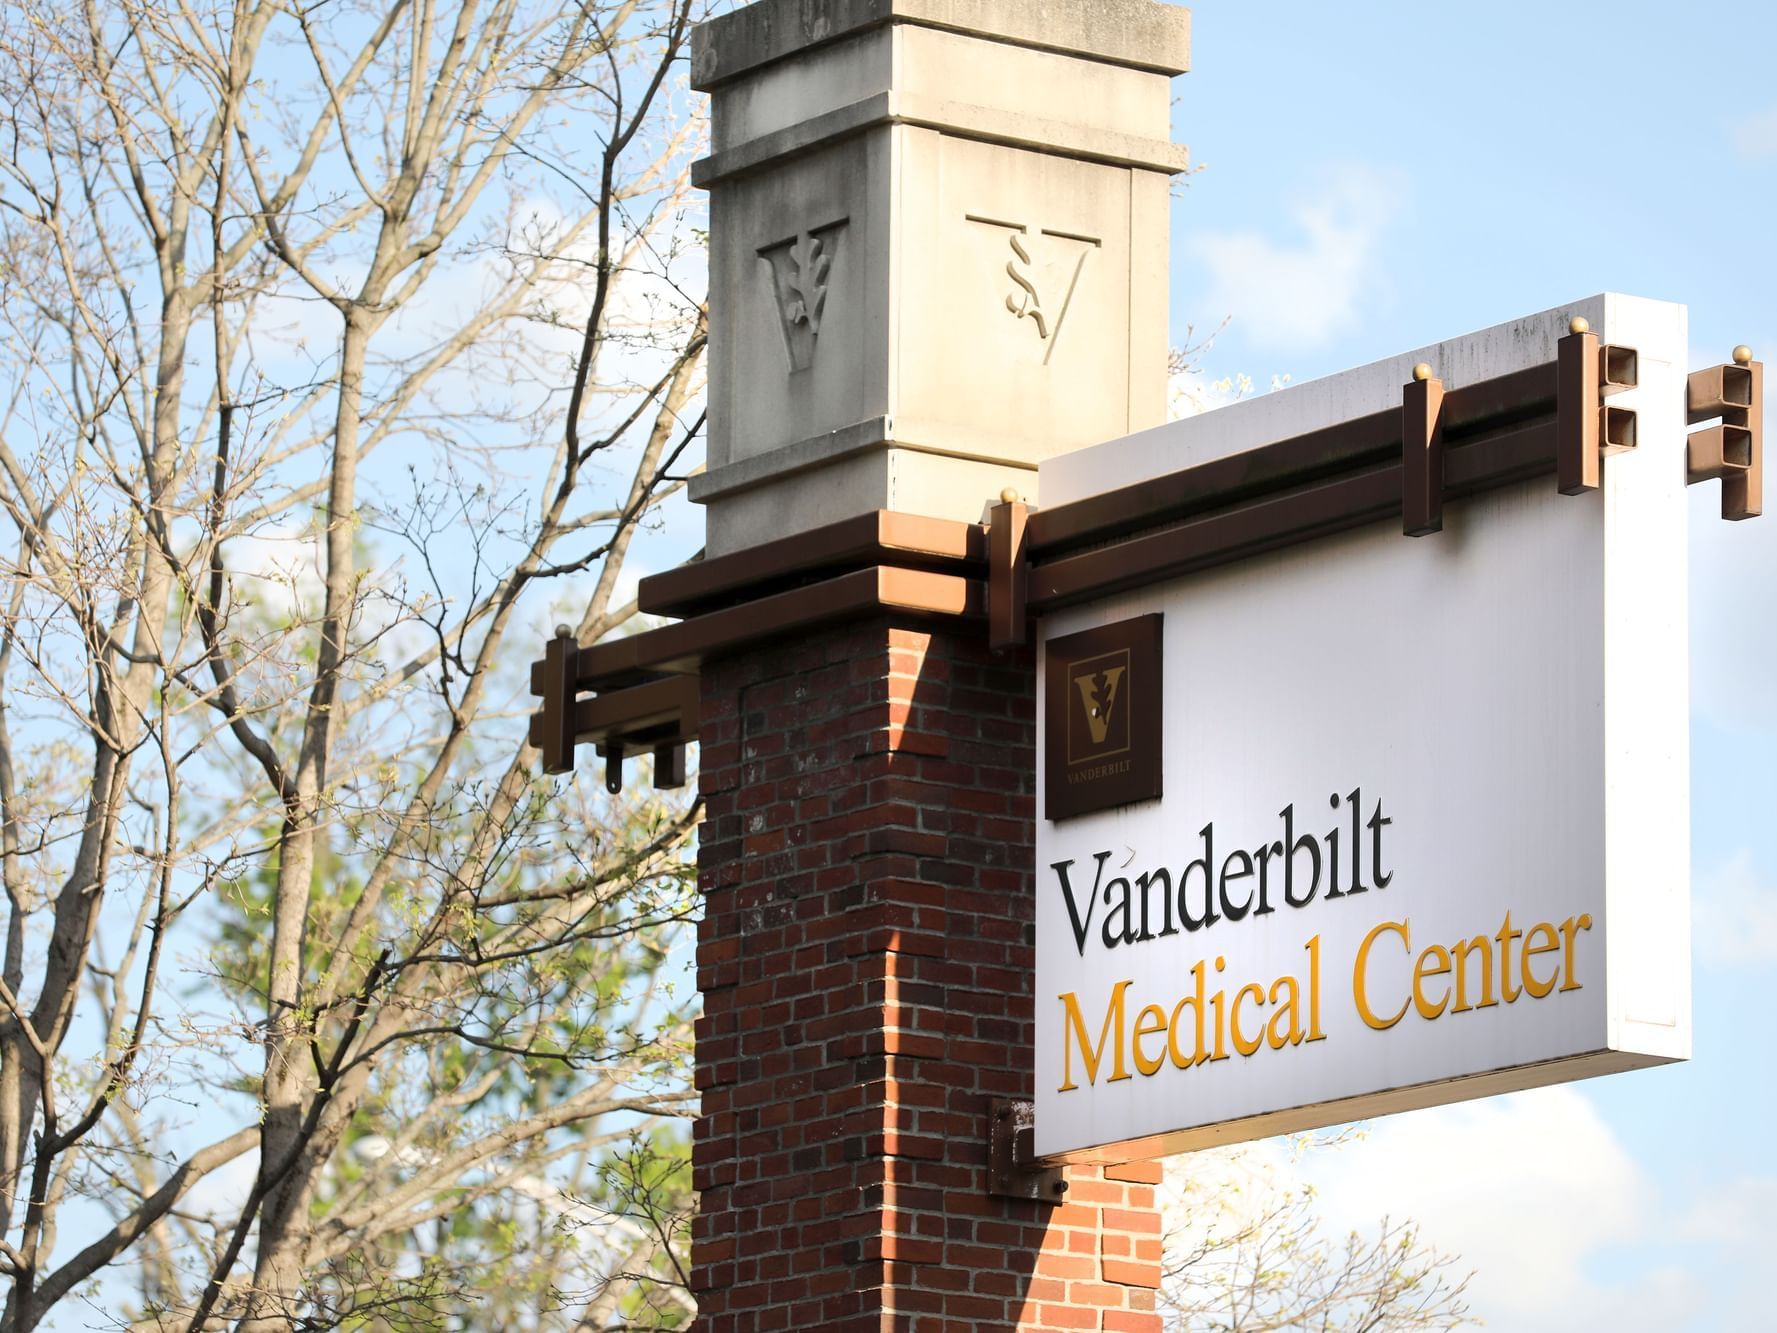 The name board of Vanderbilt Hospital displayed near Hayes Street Hotel